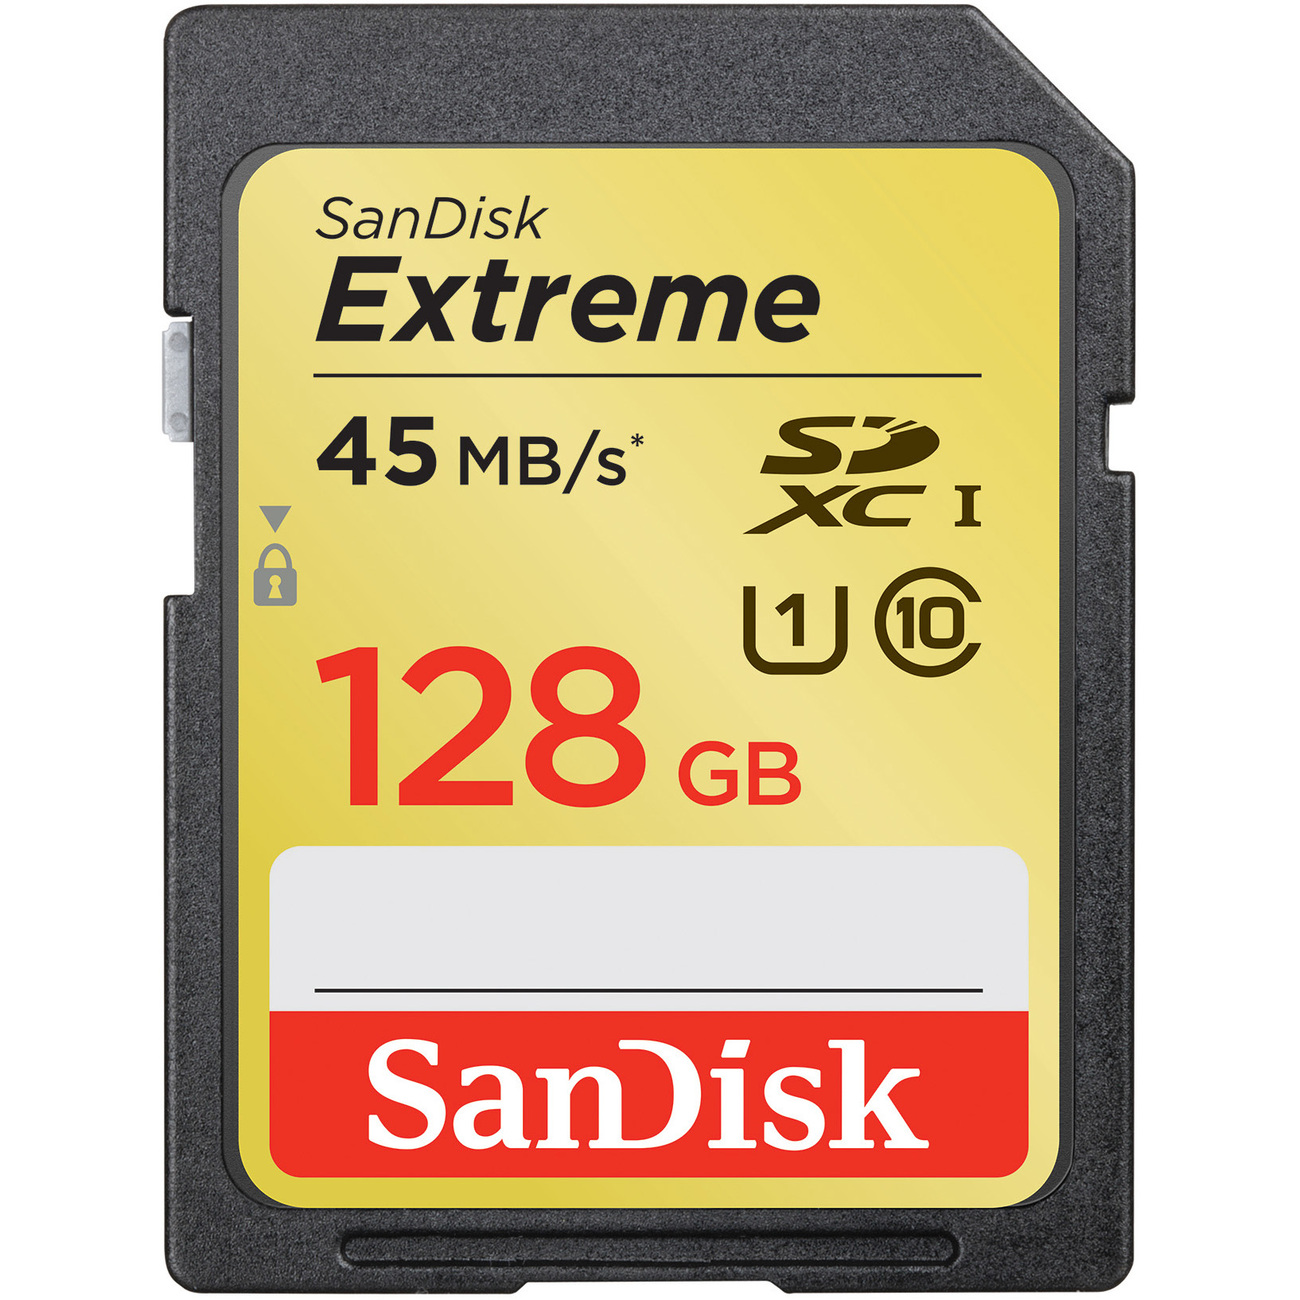 SanDisk Extreme SDXC 128GB Class 10 UHS-1